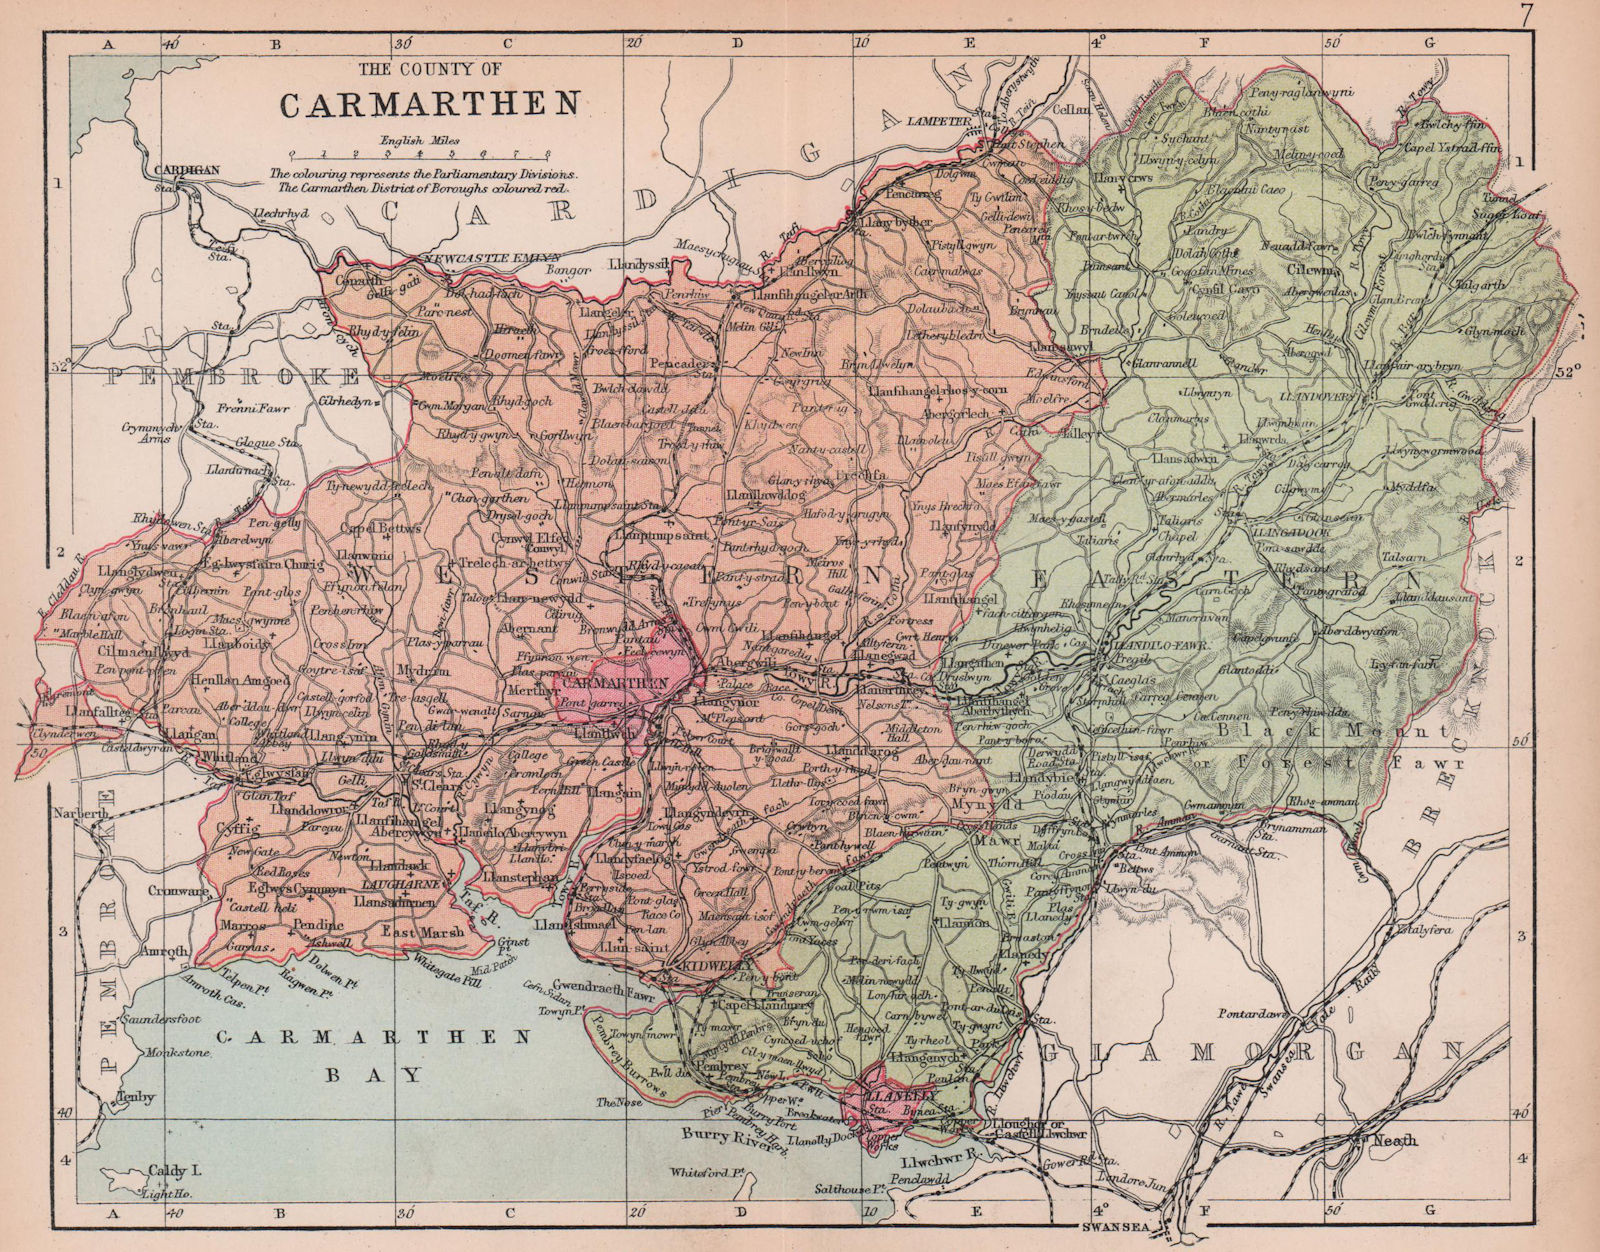 CARMARTHENSHIRE "The County of Carmarthen" Llanelli Wales BARTHOLOMEW 1882 map